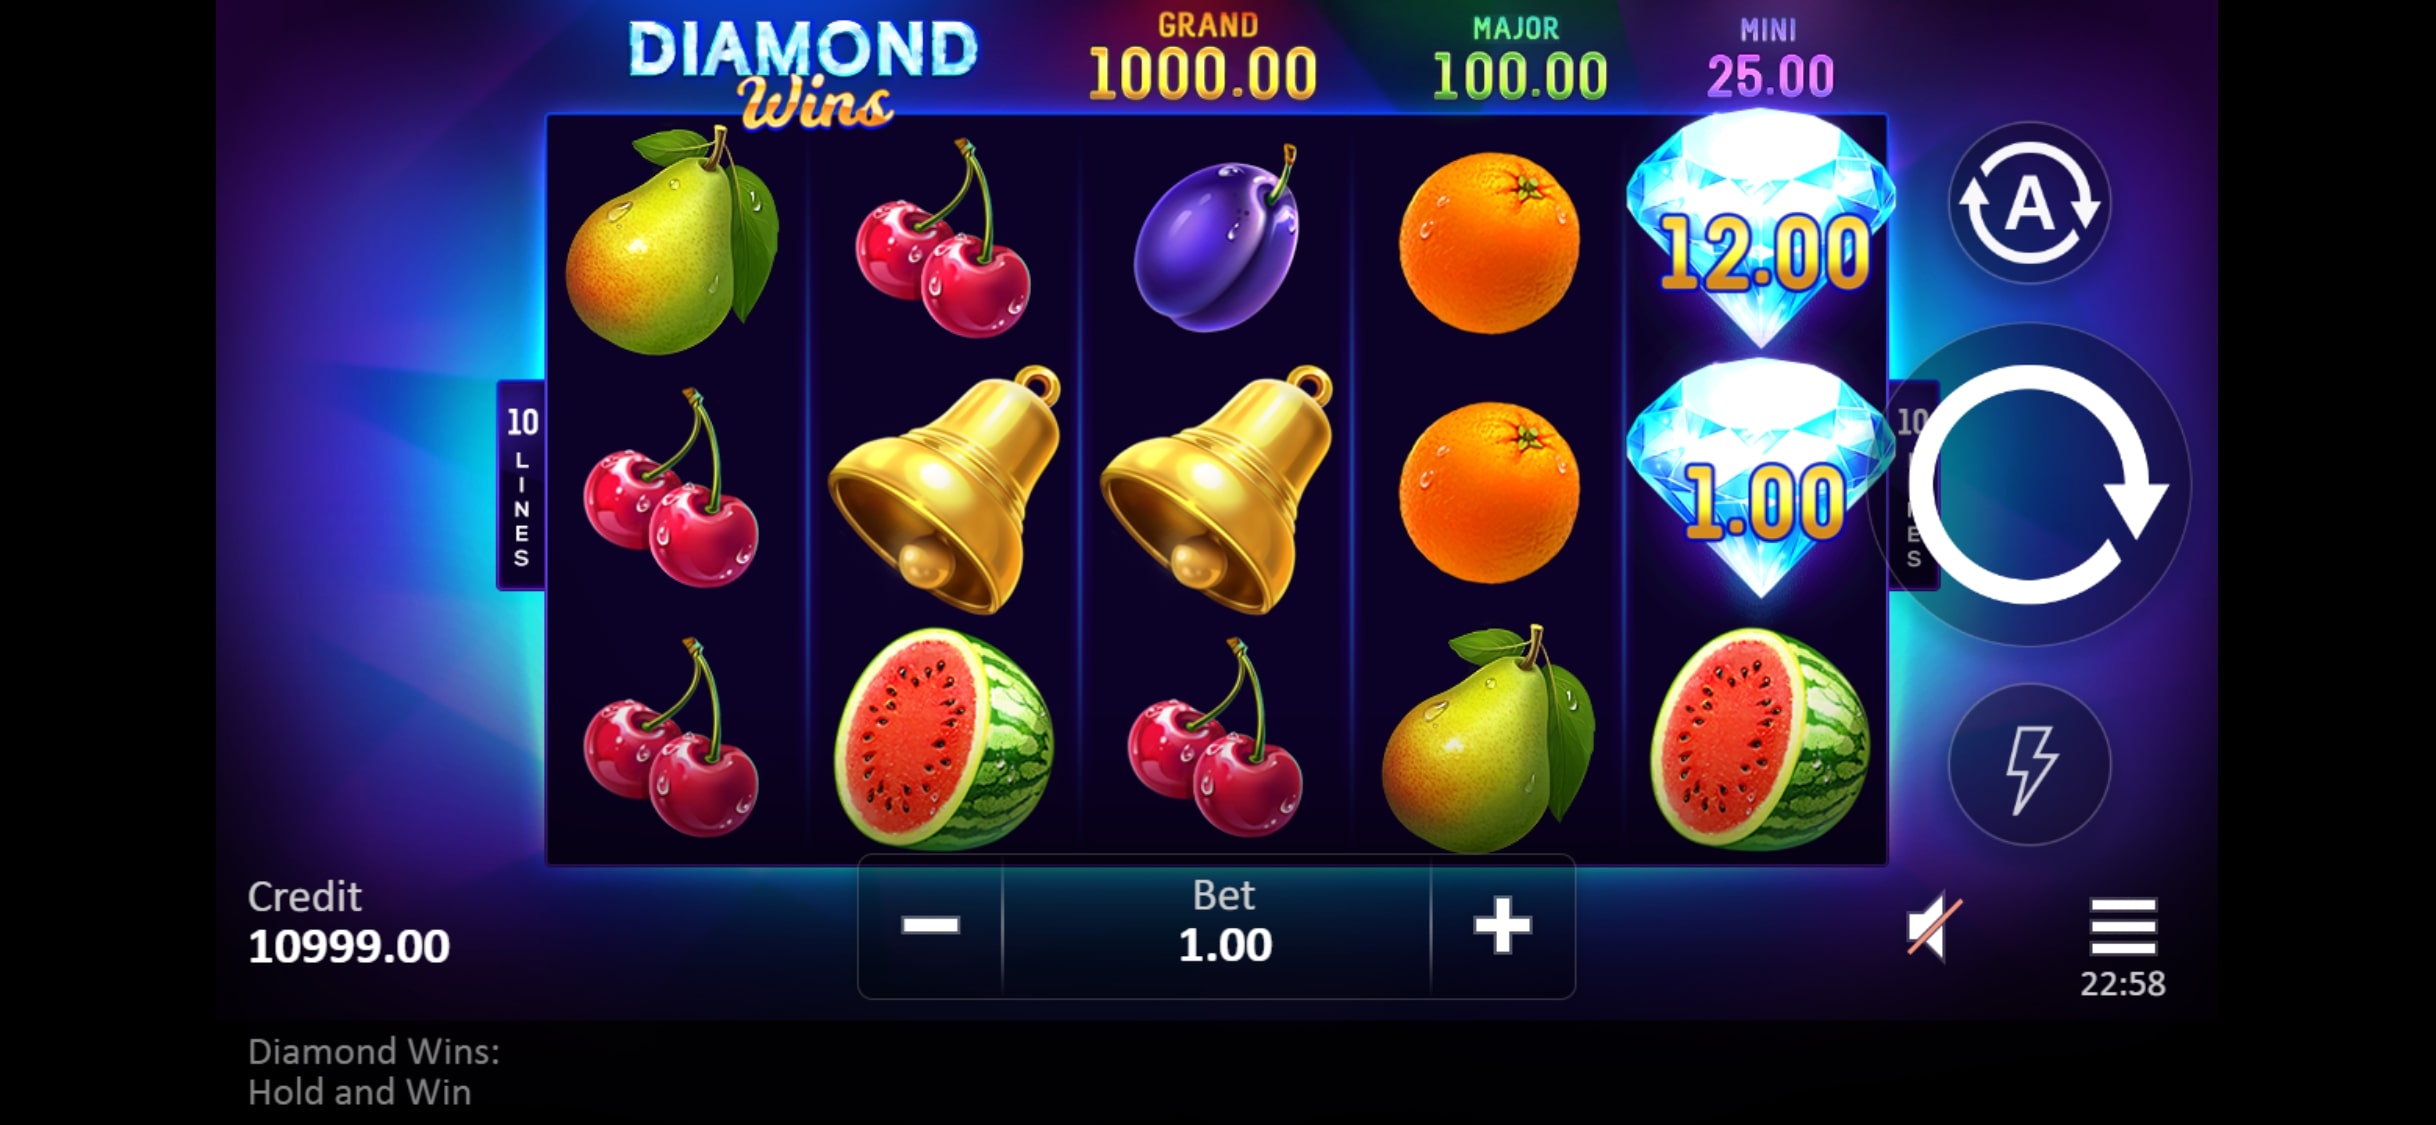 GetSlots Casino Mobile Slot Games Review